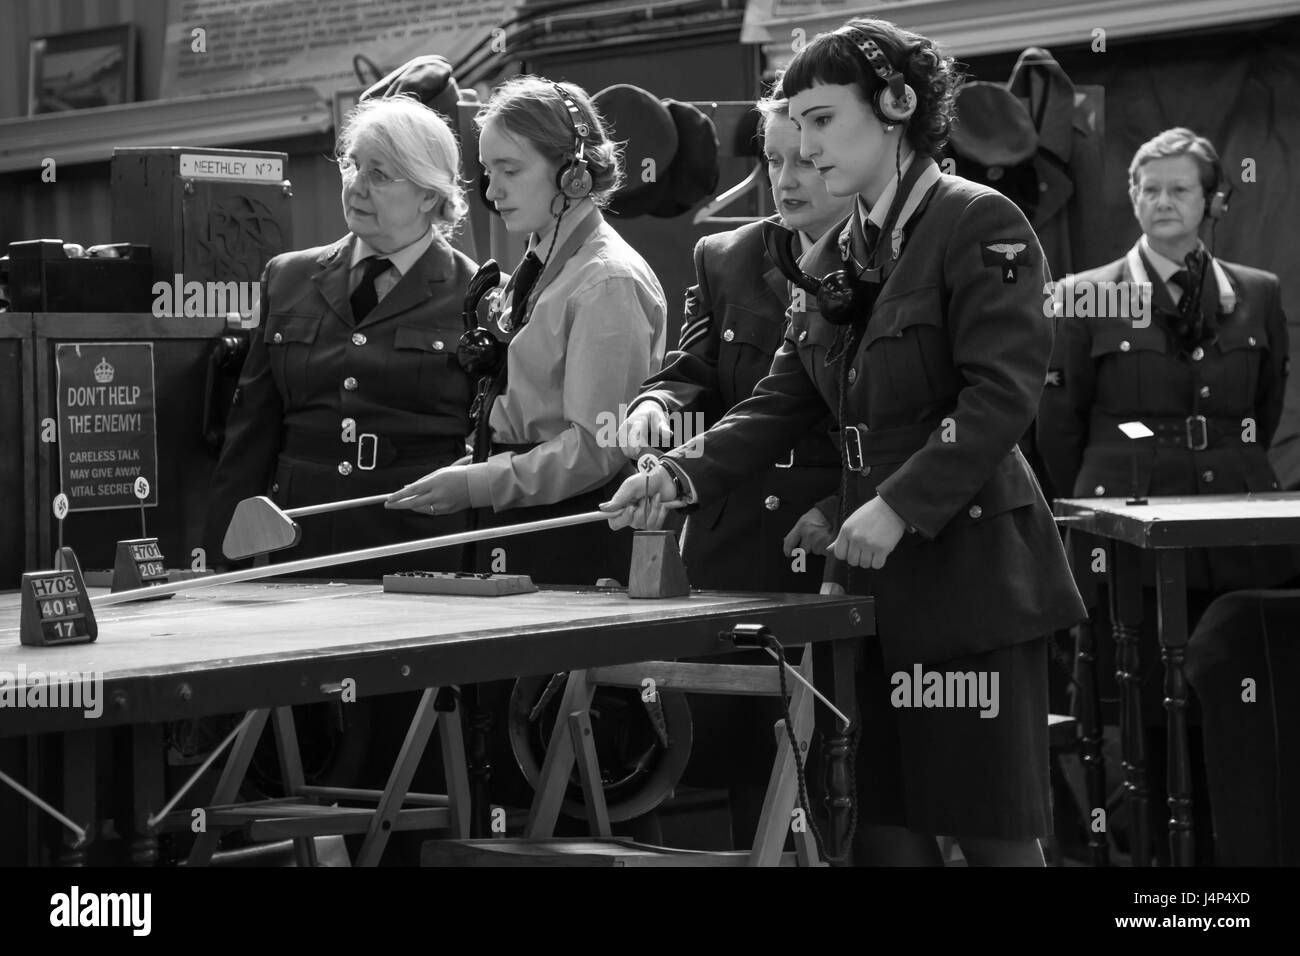 RAF WW2 Control Room Reenactment Stock Photo